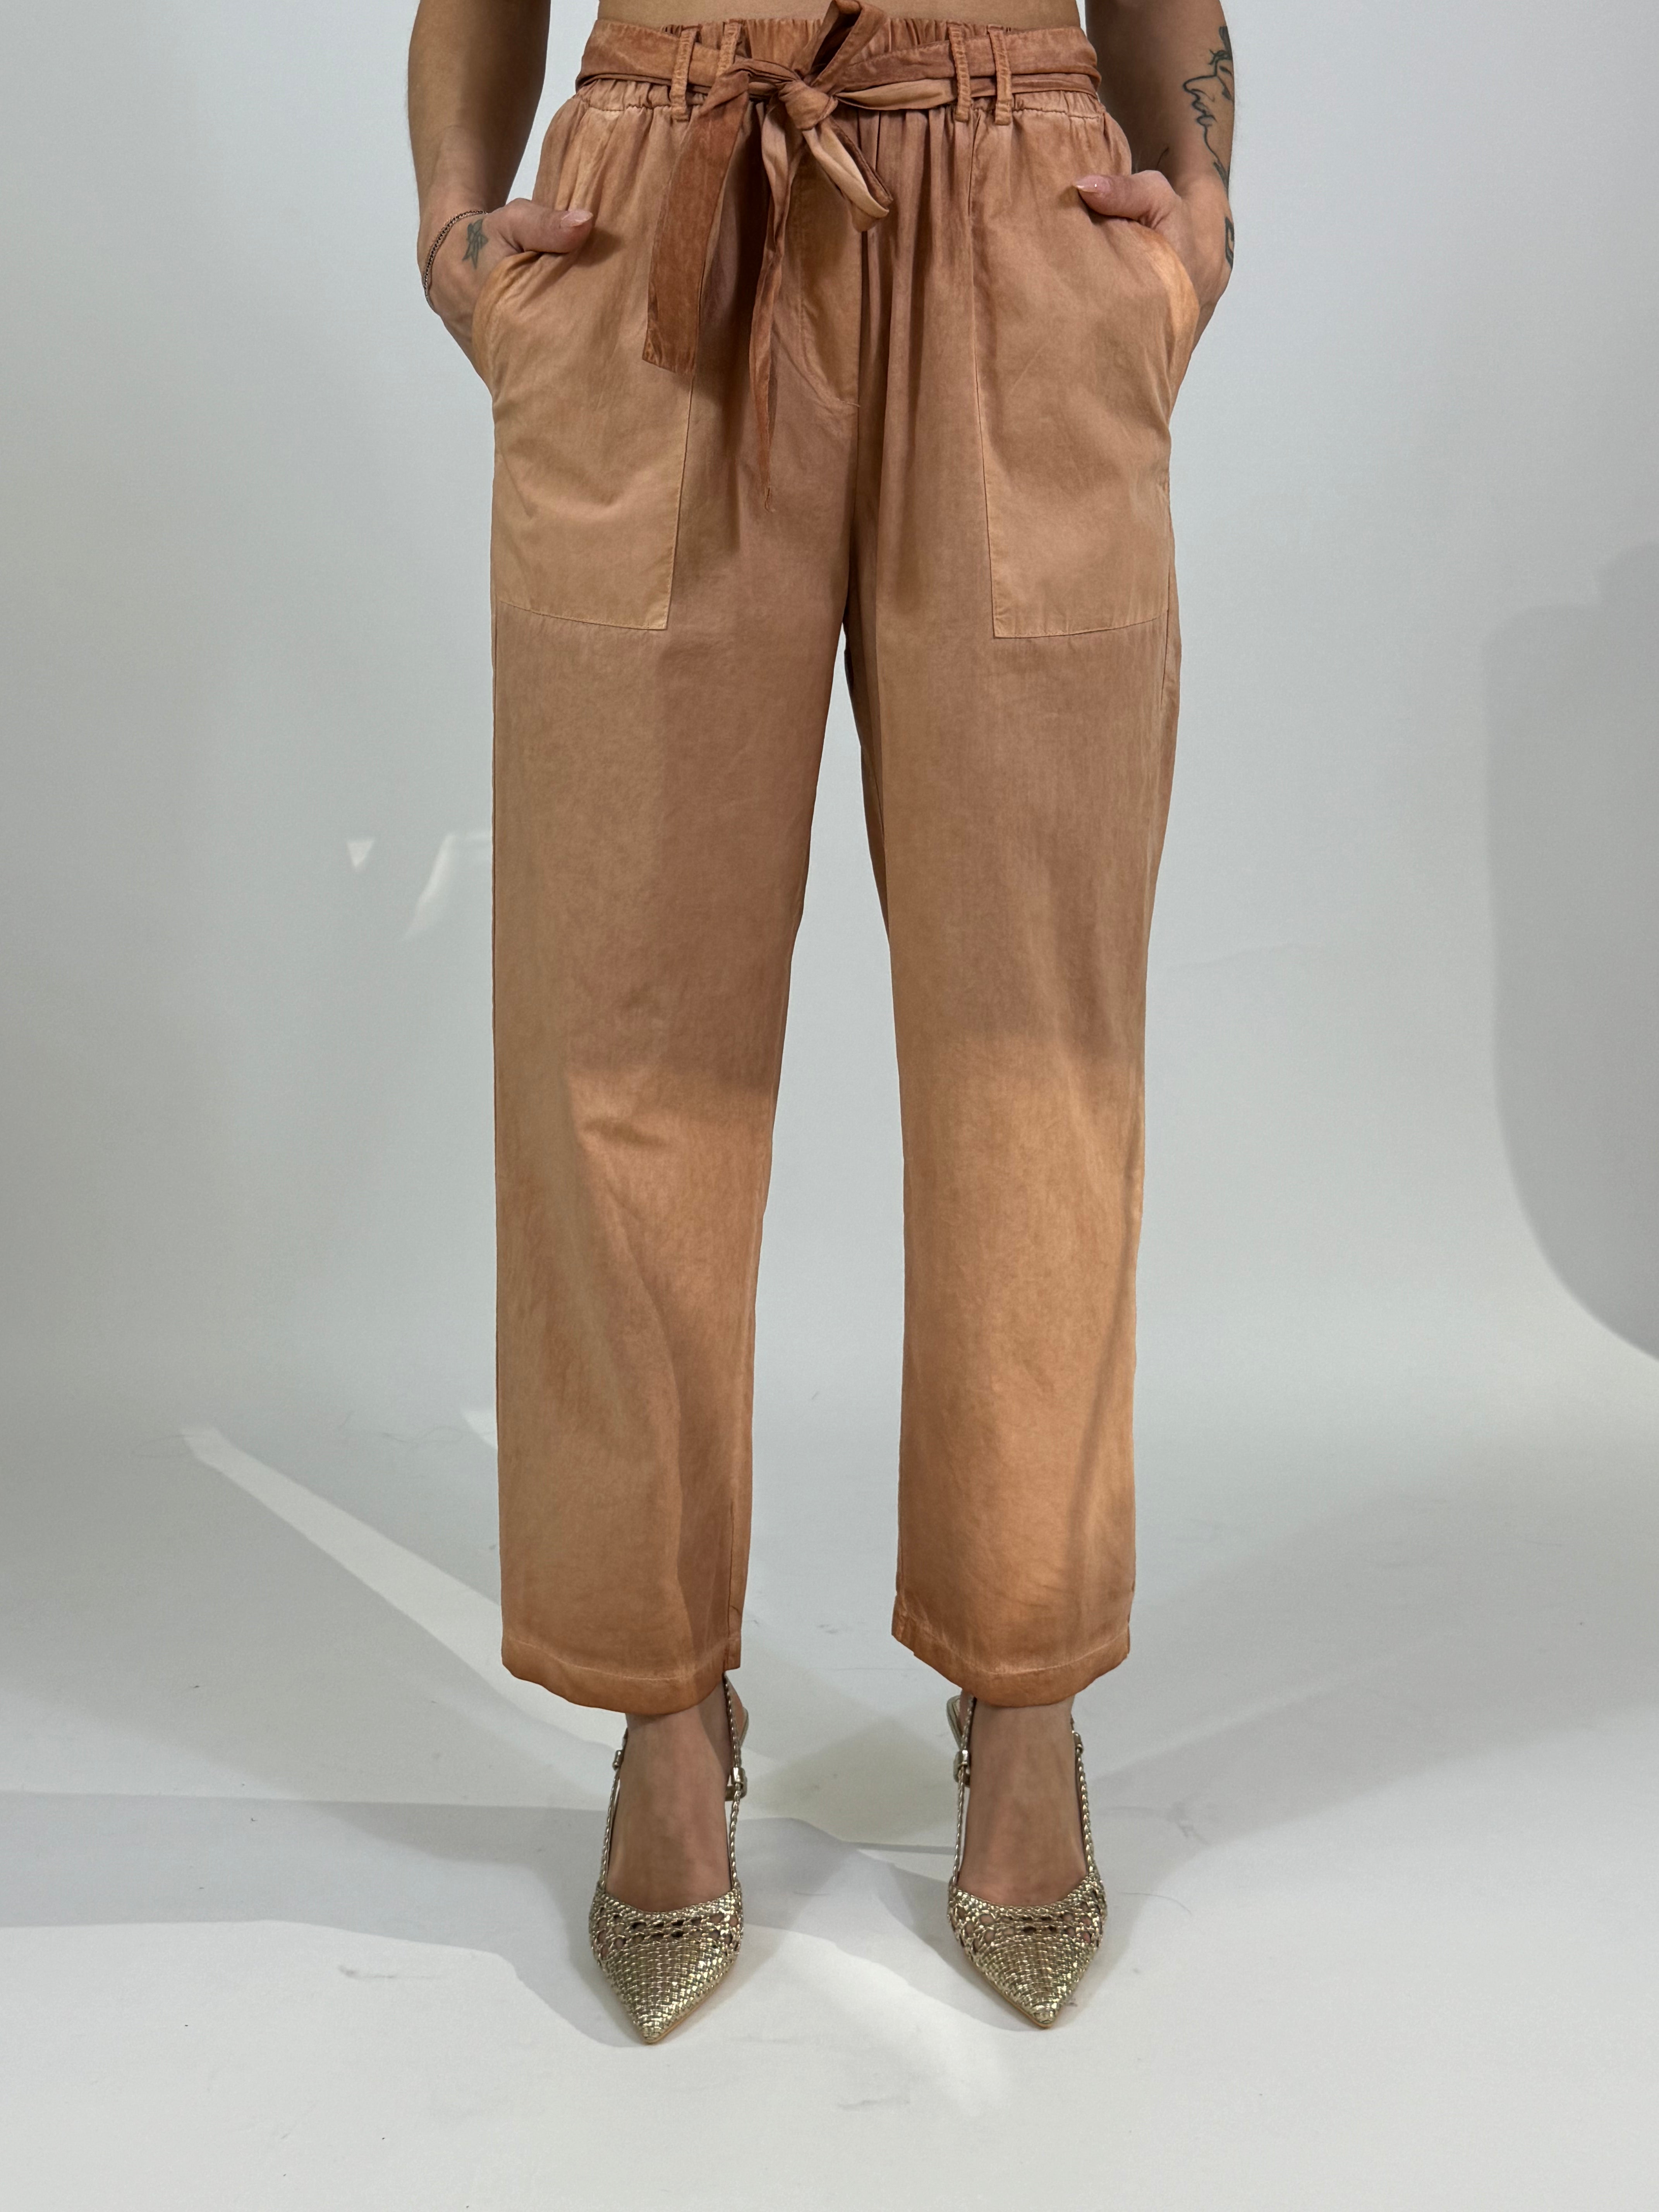 Pantalone lungo Susy Mix effetto vintage delavè color bruciato